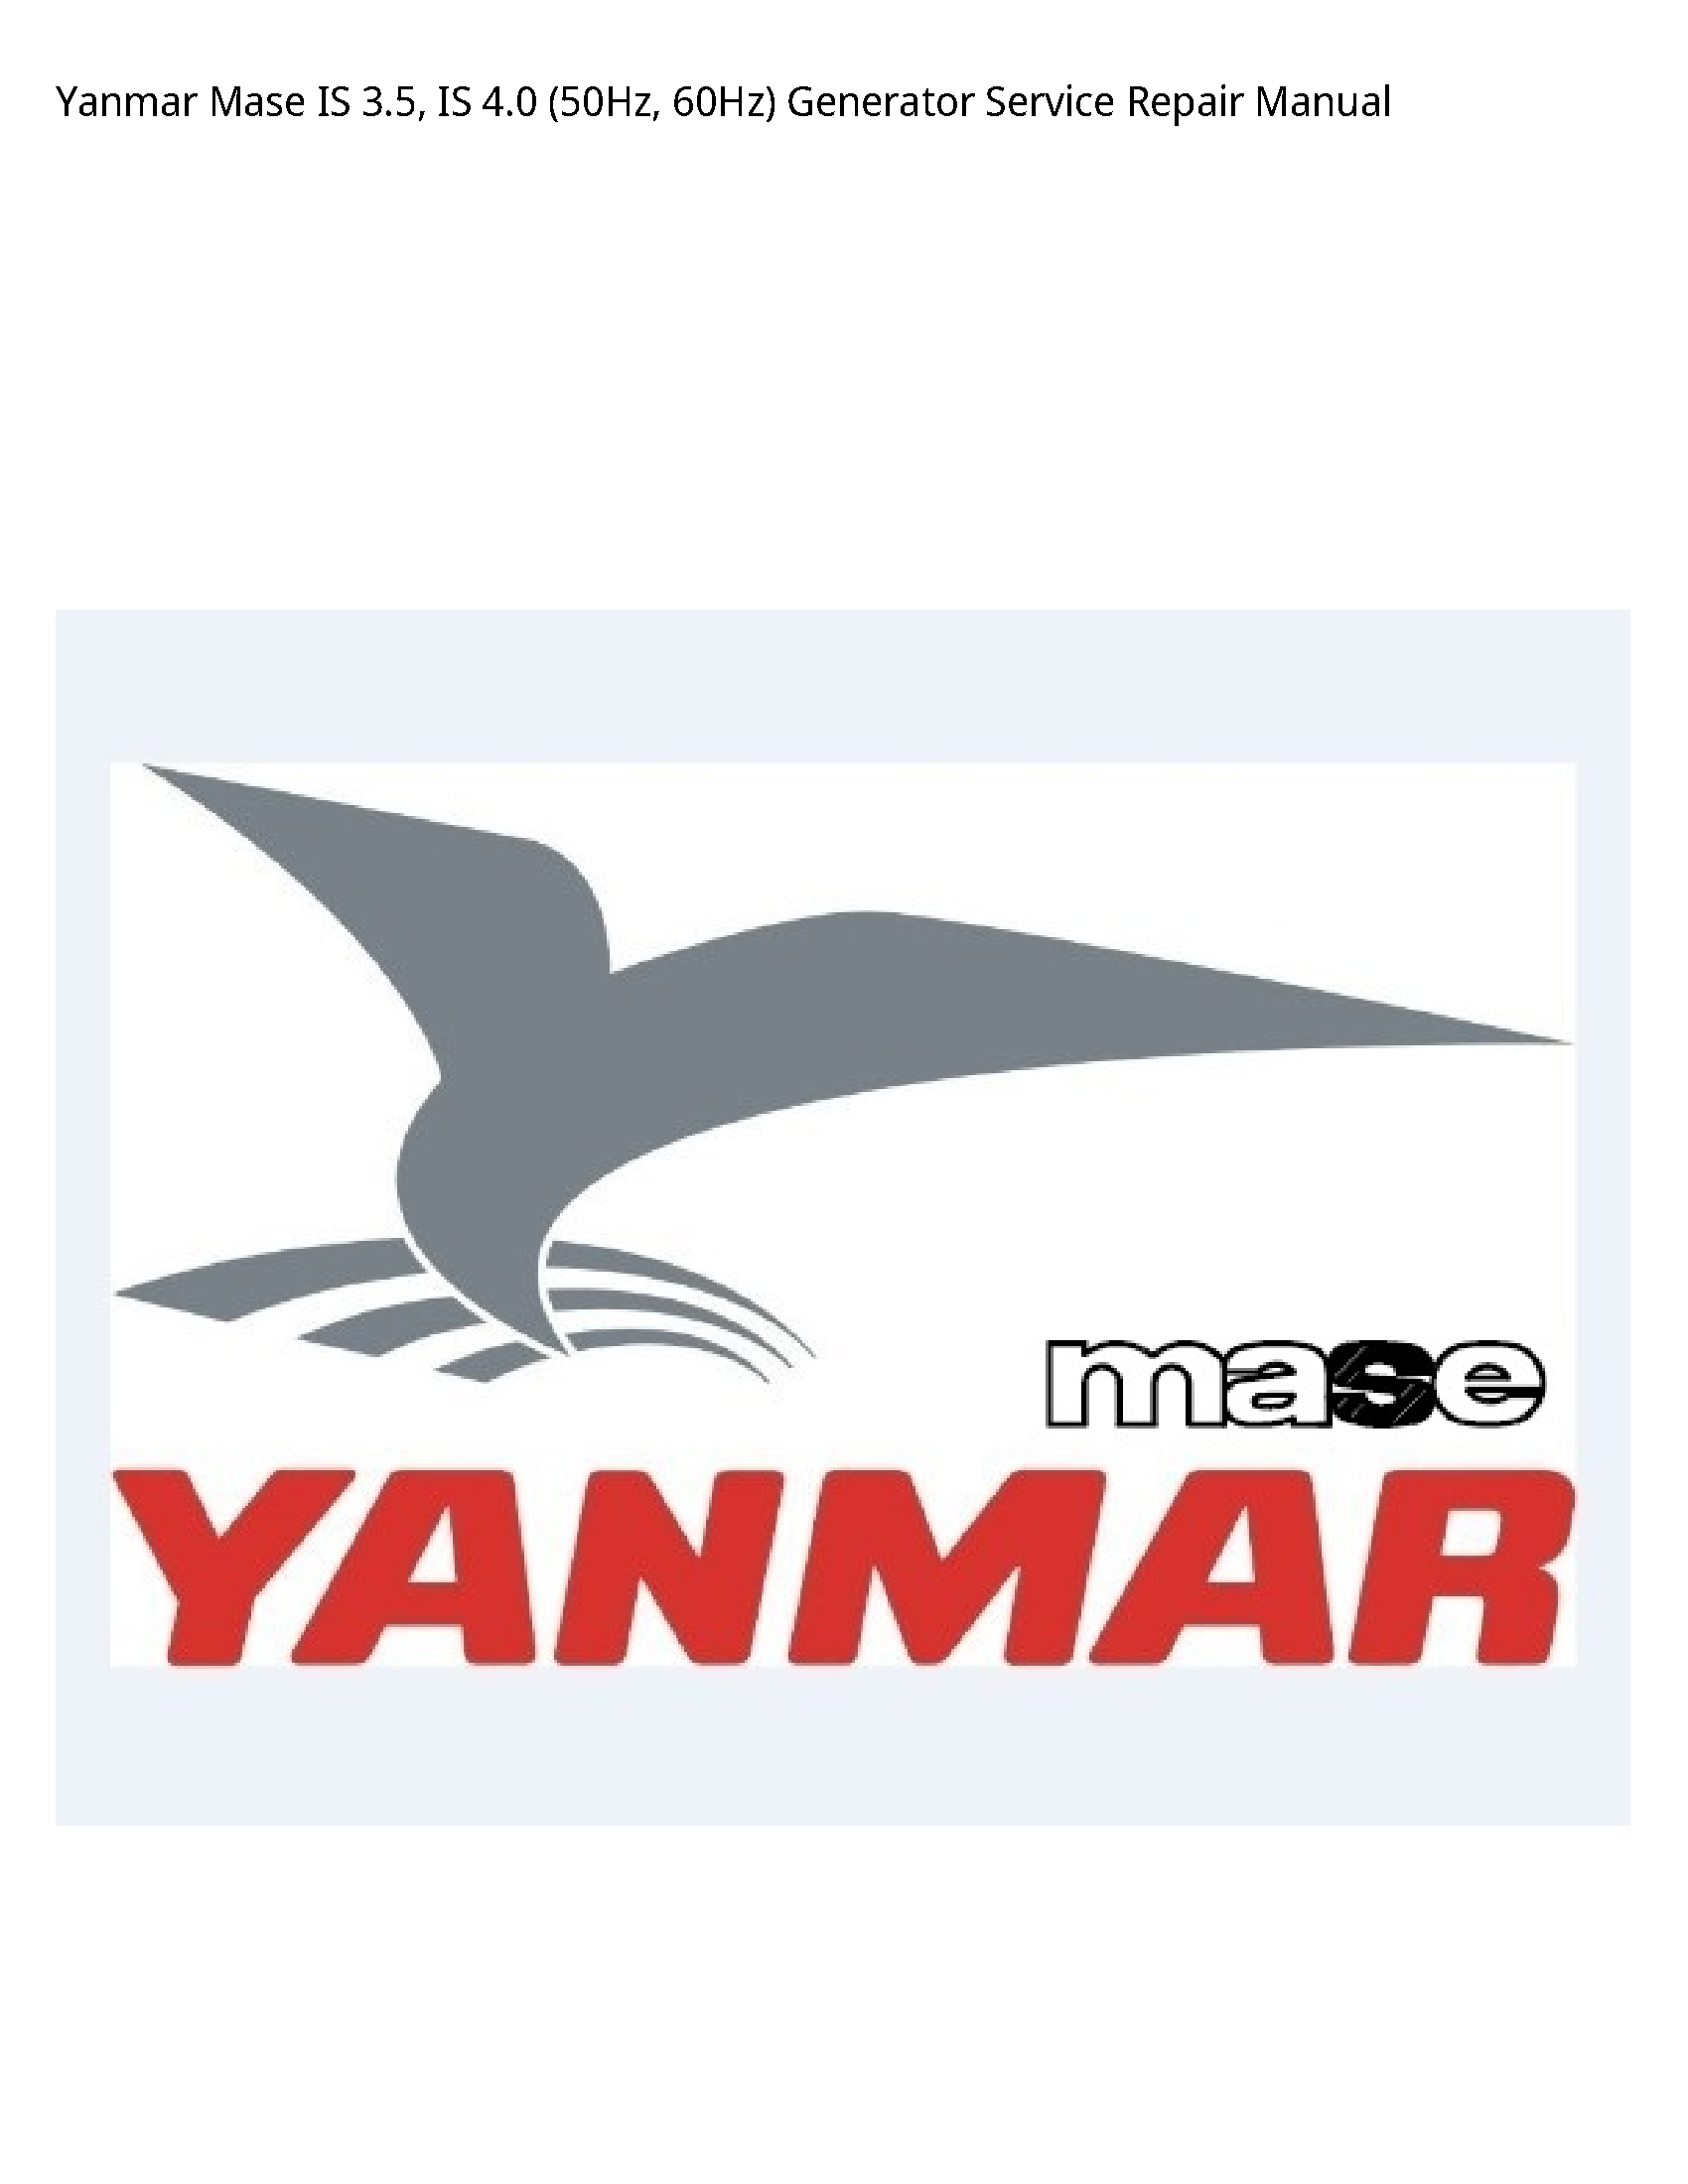 Yanmar 3.5 Mase IS IS Generator manual